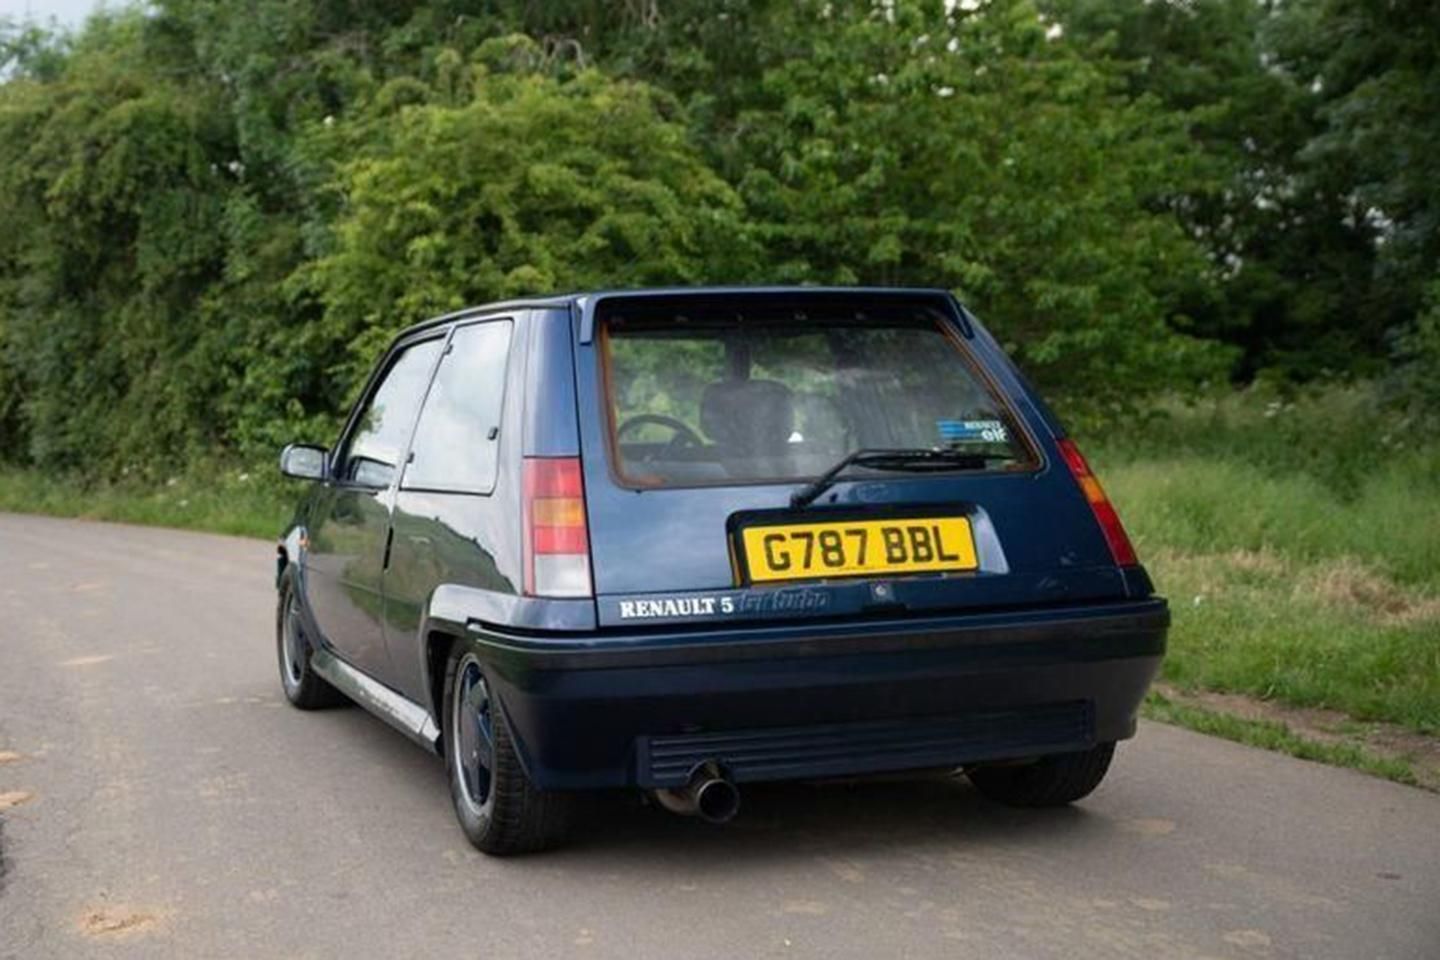 Renault 5 Gt Turbo Raider Spotted Pistonheads Uk